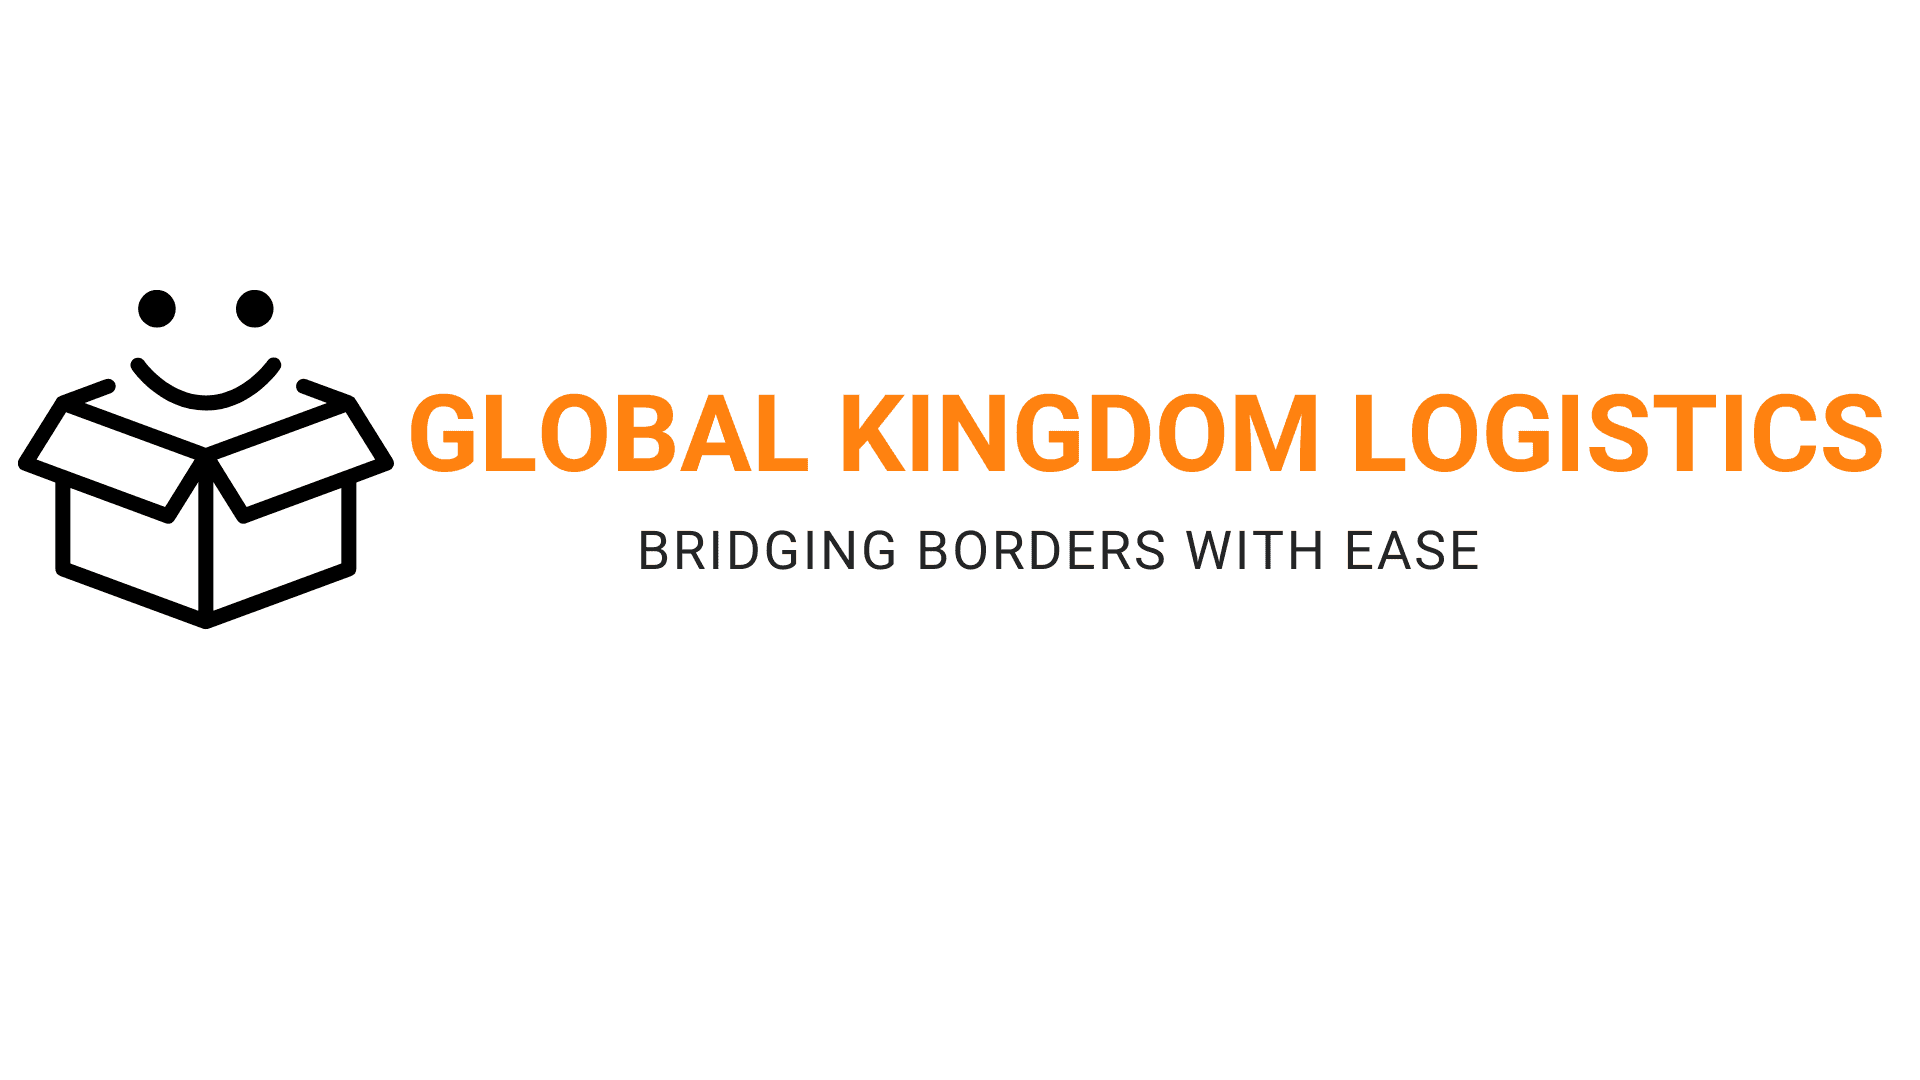 GLOBAL KINGDOM LOGISITCS BRIDGING BORDERS WITH EASE (Calendar)